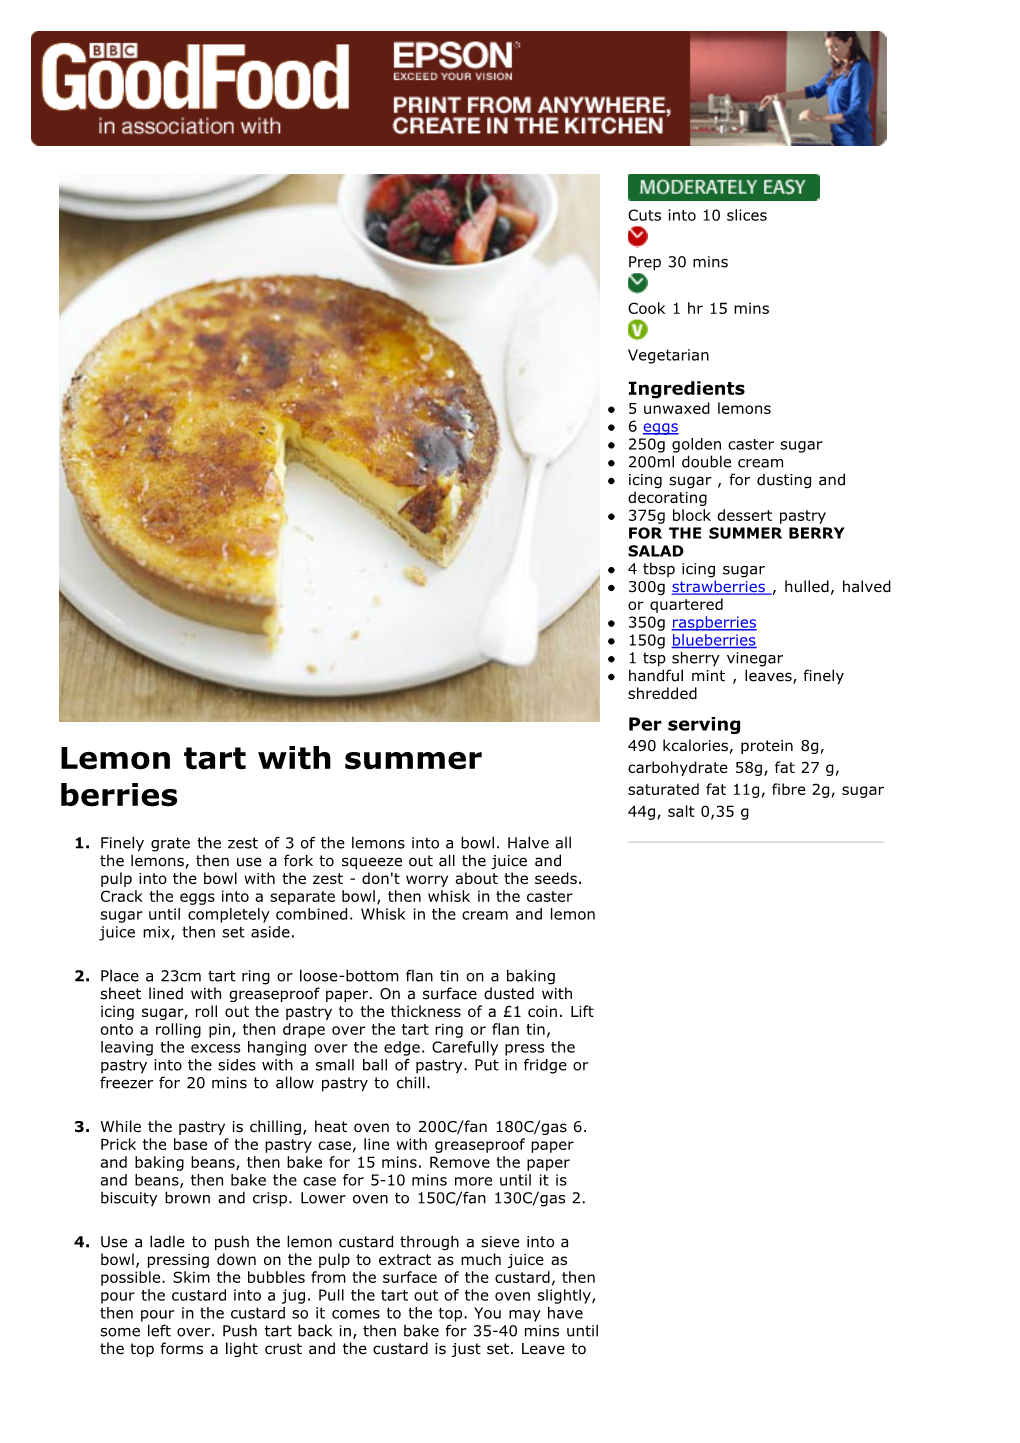 Lemon Tart with Summer Berries Recipe